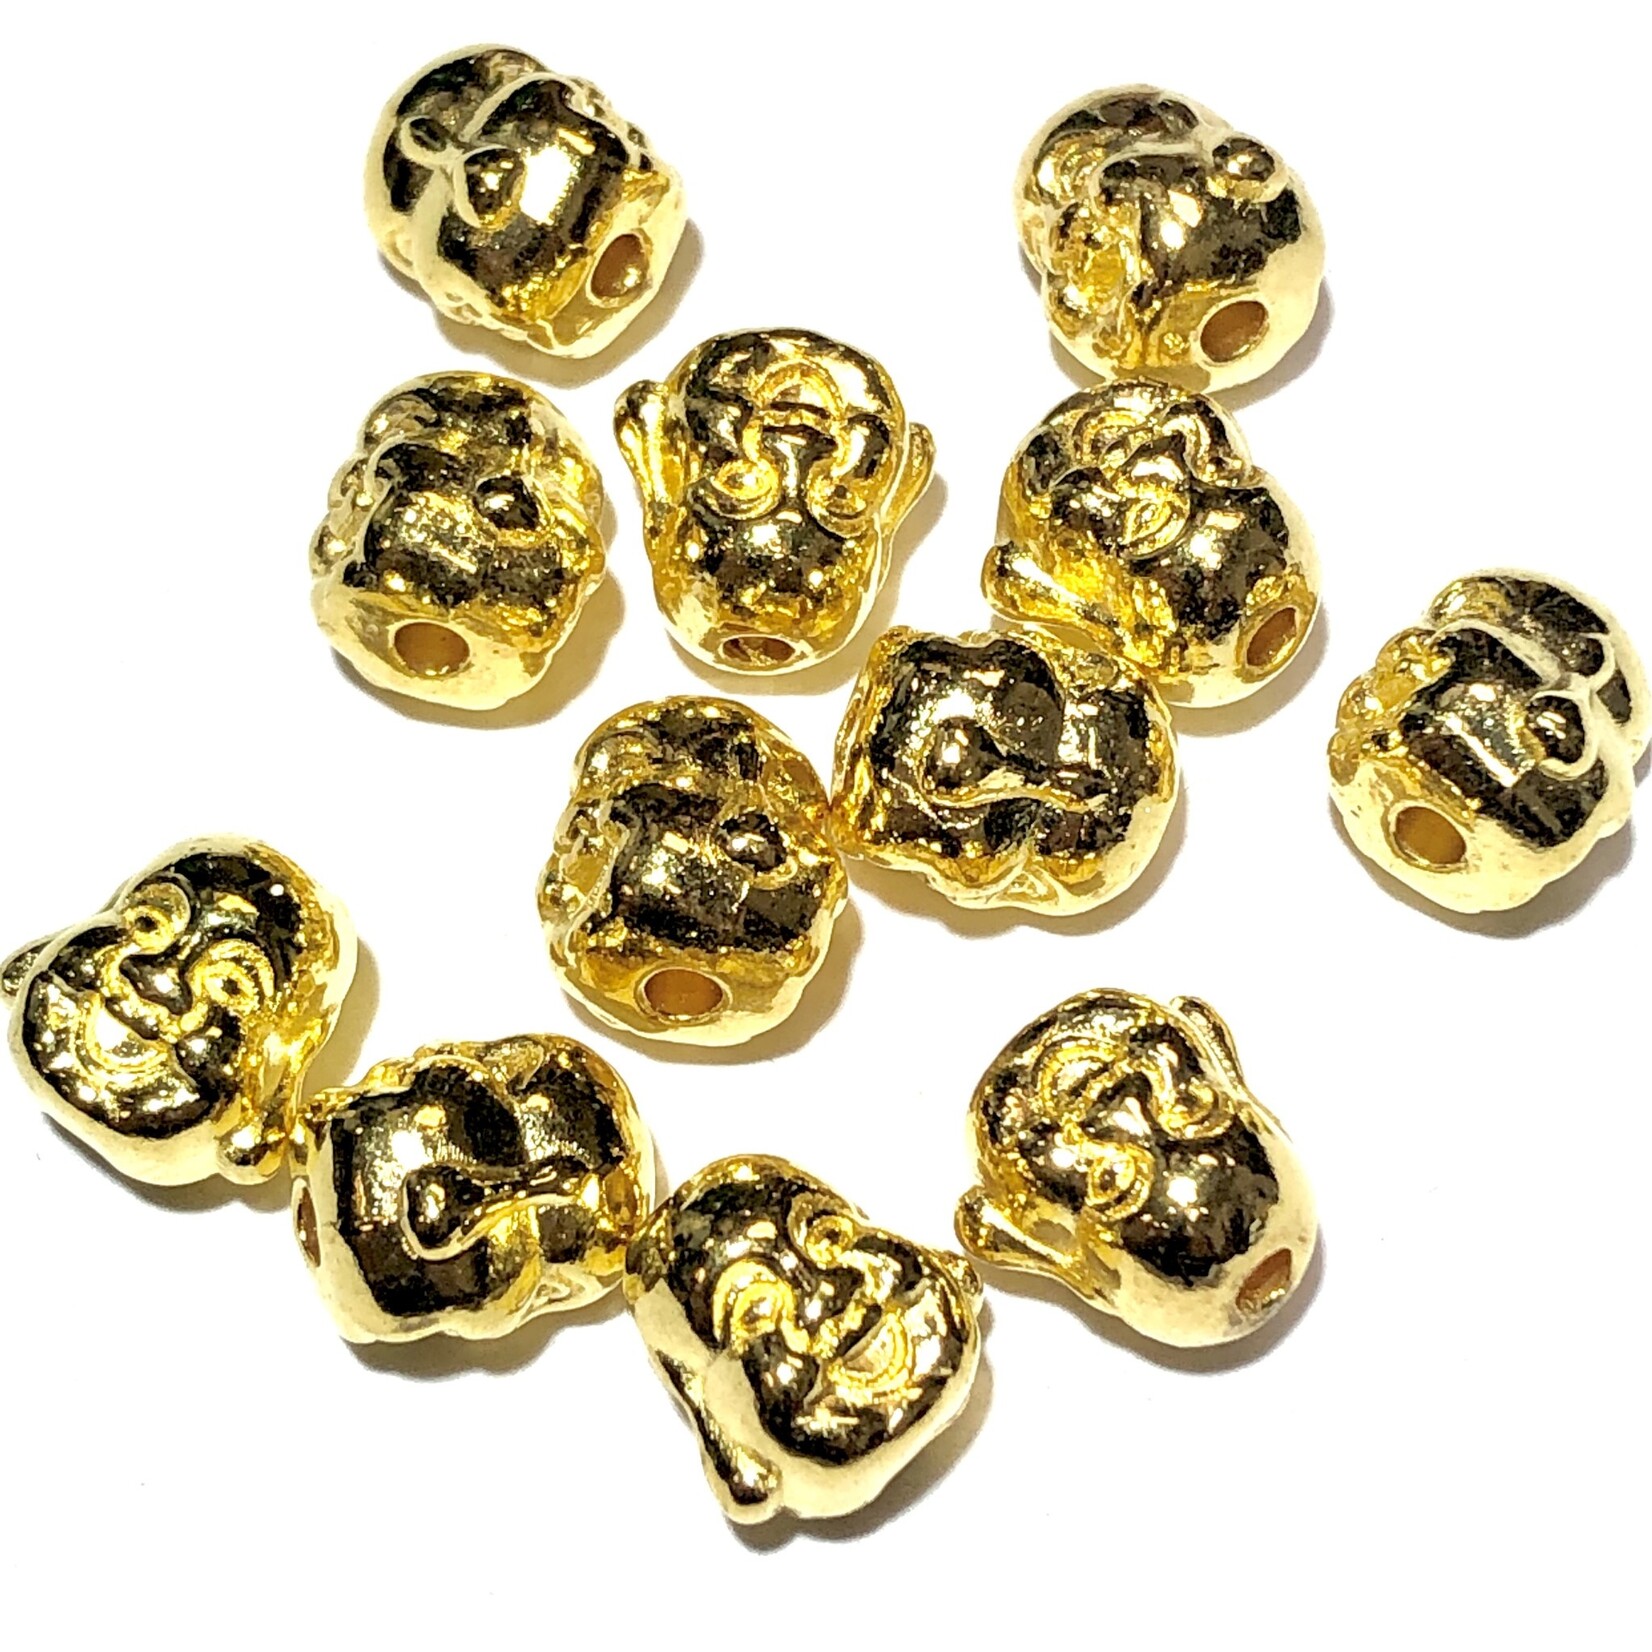 Tibetan Gold Alloy 10mm Buddha Head Bead 16pcs